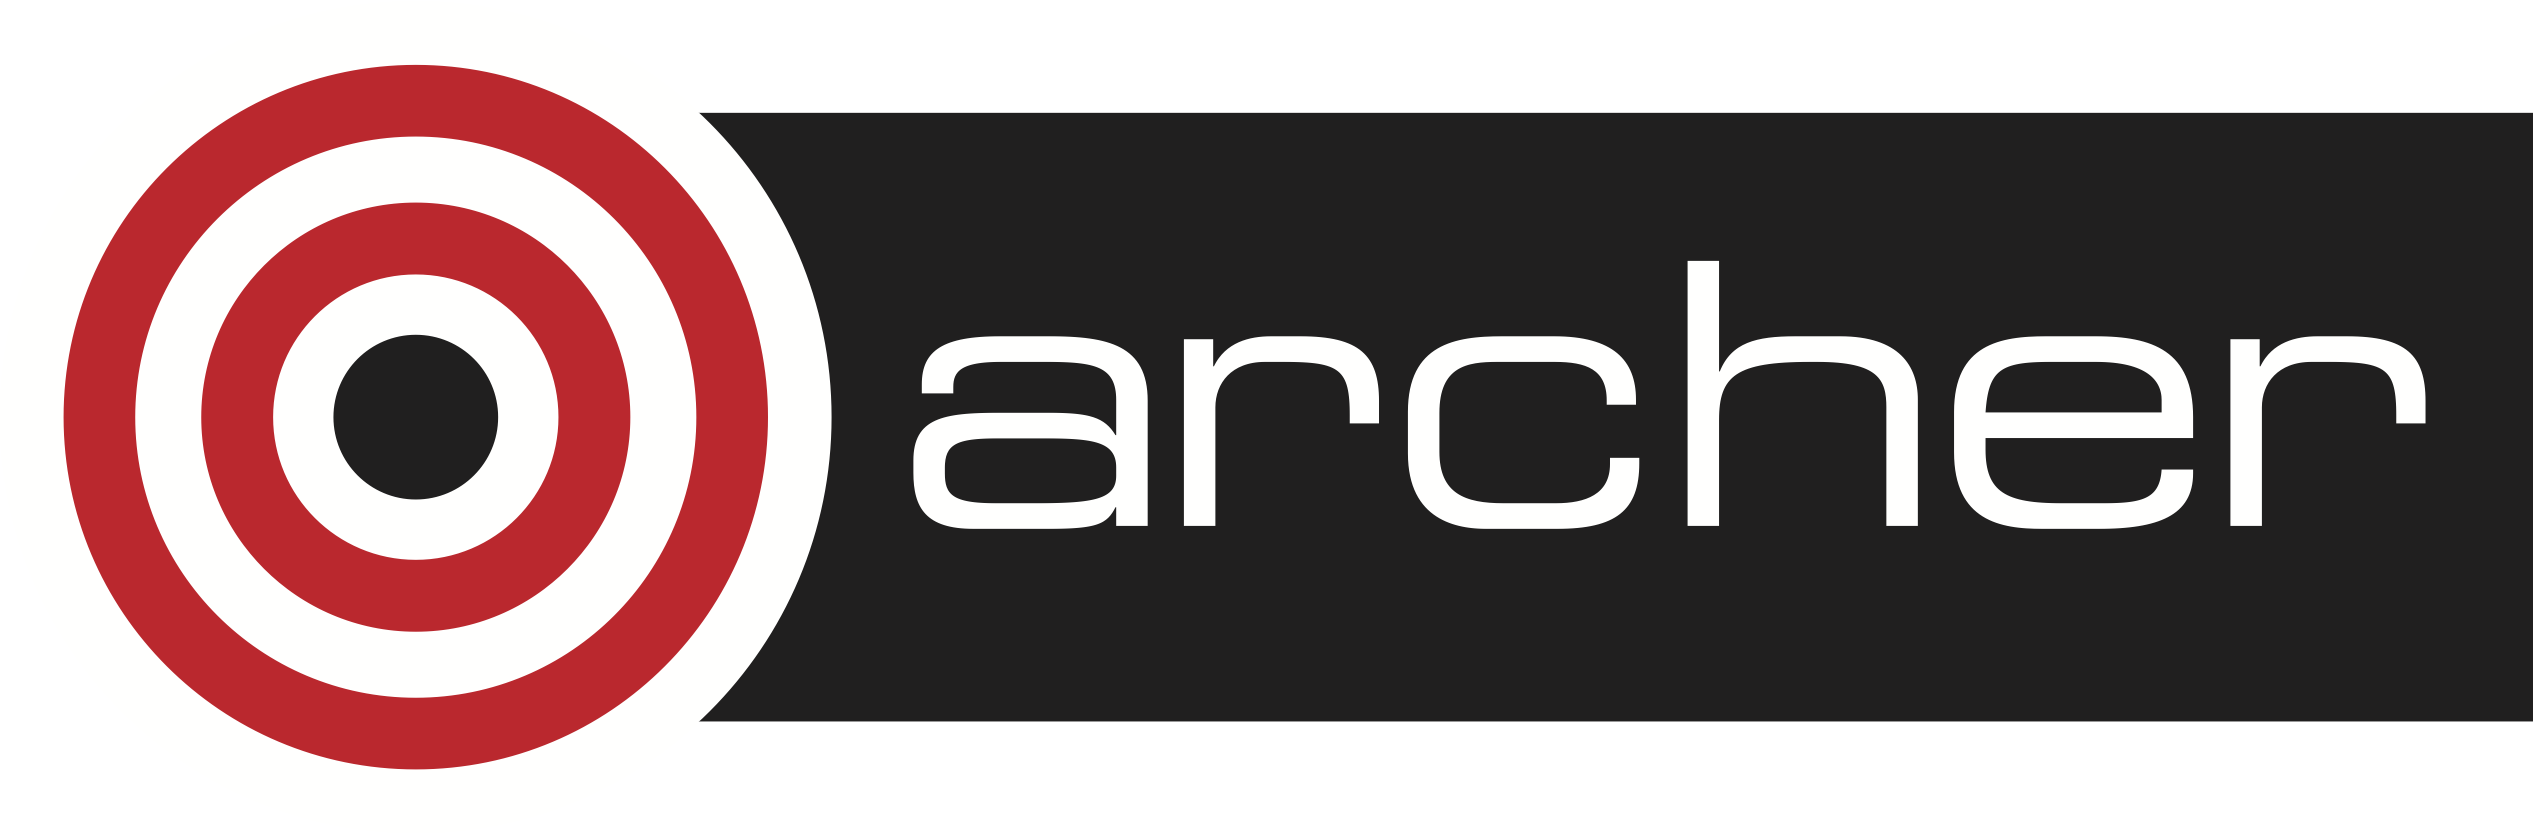 ARCHER national supercomputing service logo